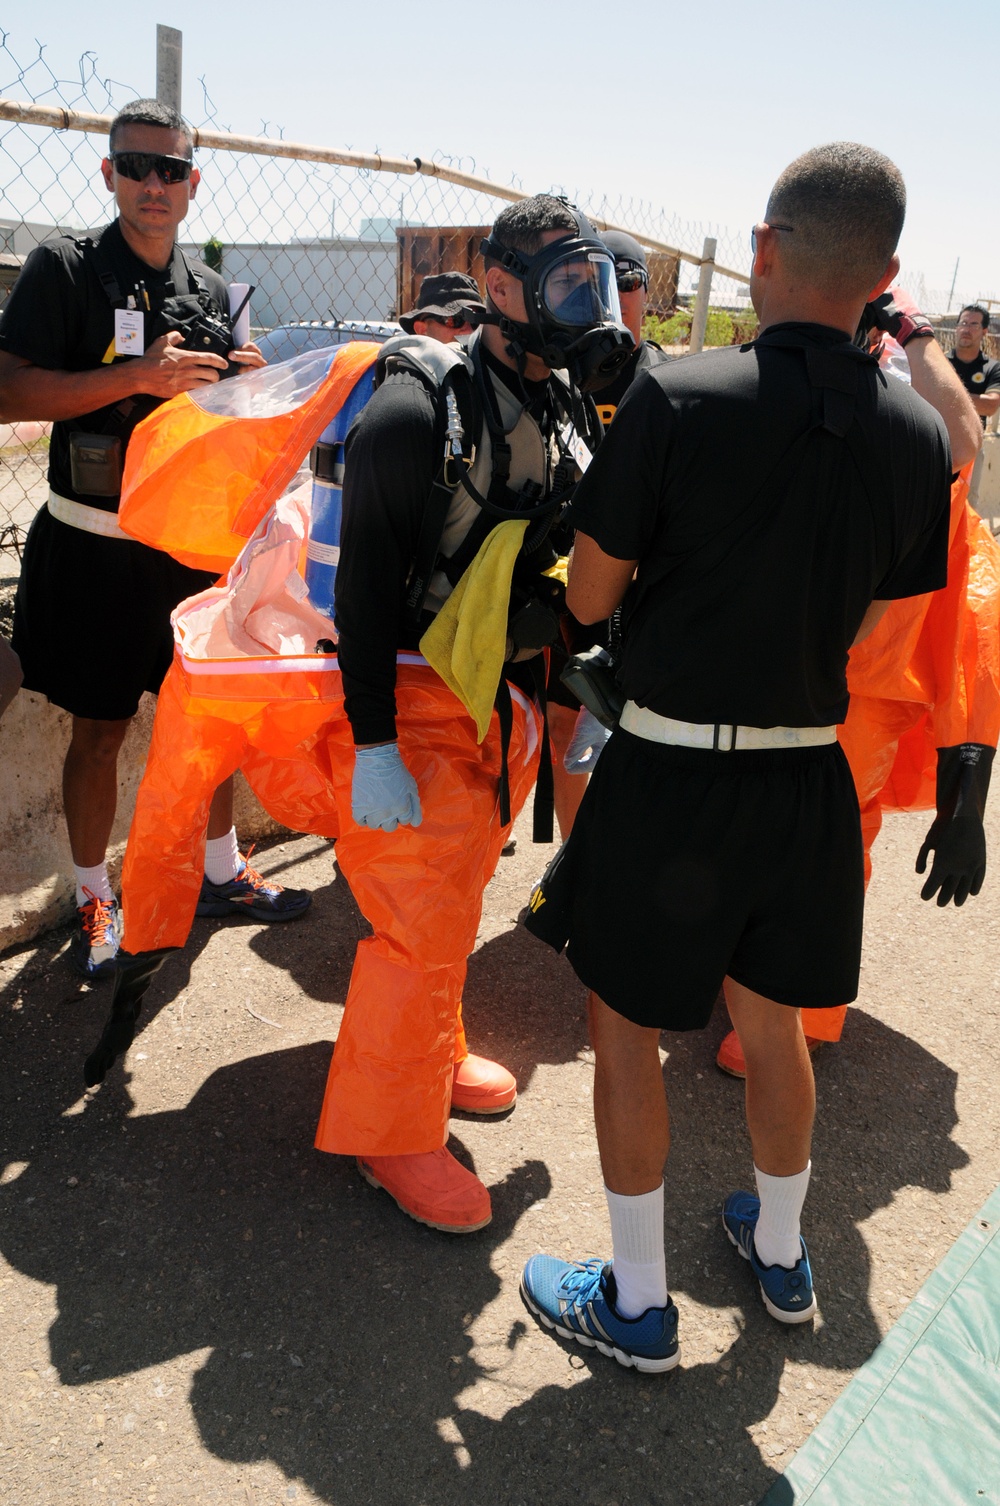 First responders participate in Borinqueneer Response exercise